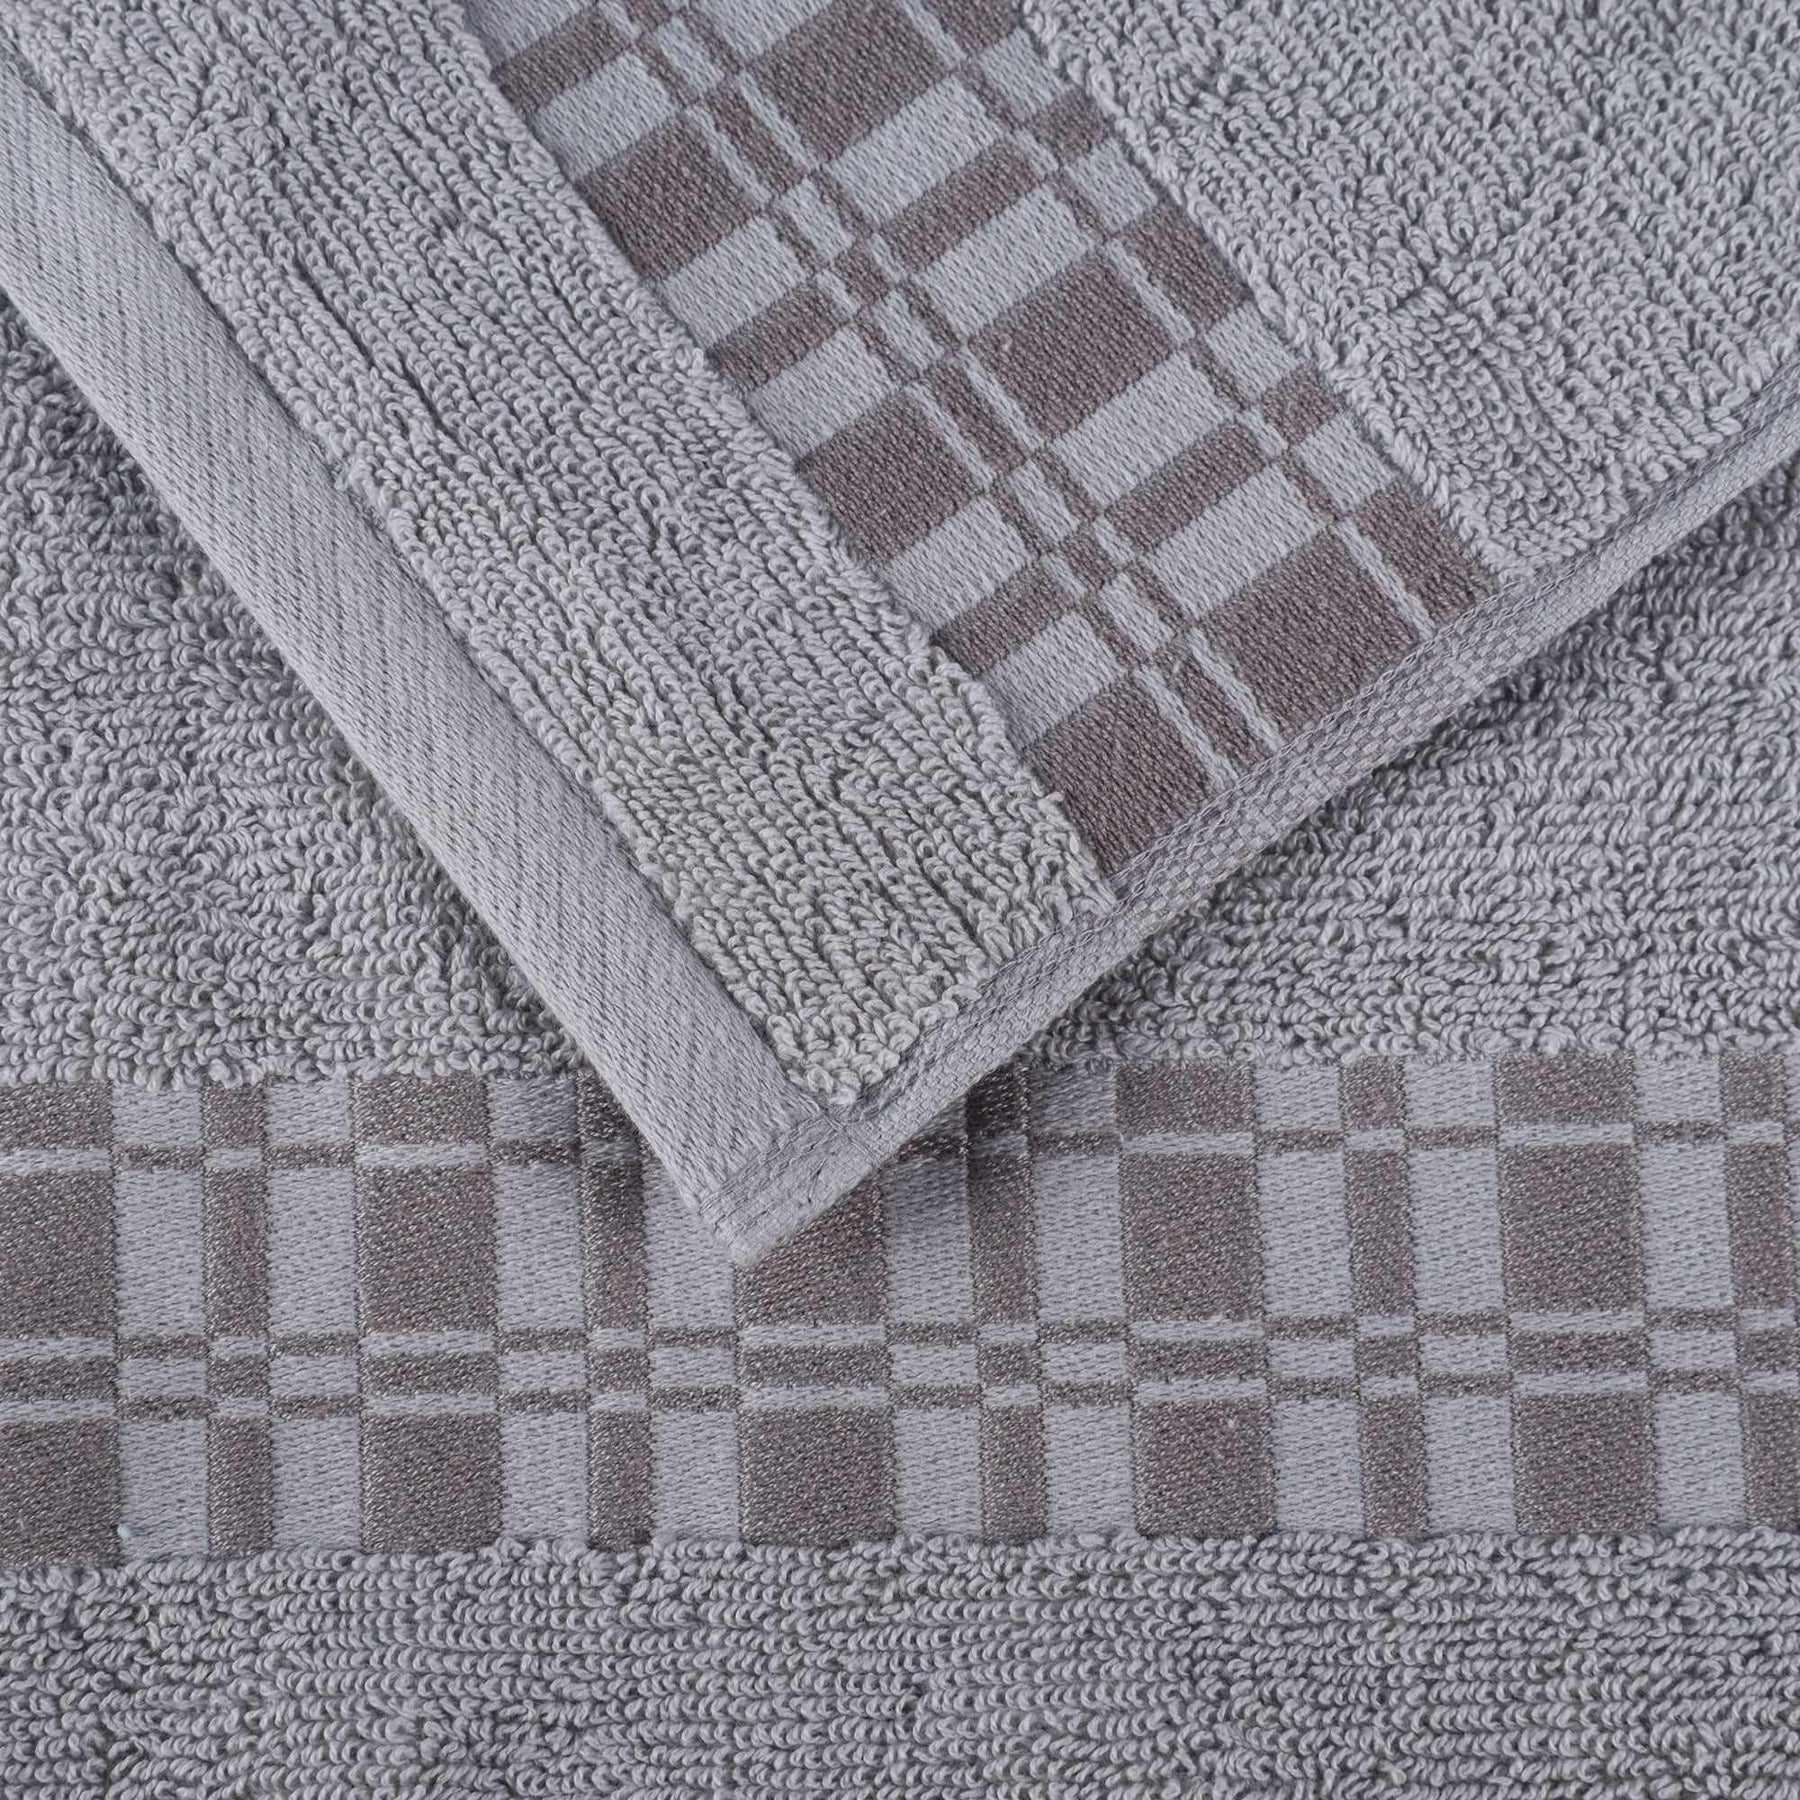  Superior Larissa Cotton 6-Piece Assorted Towel Set with Geometric Embroidered Jacquard Border - Chrome